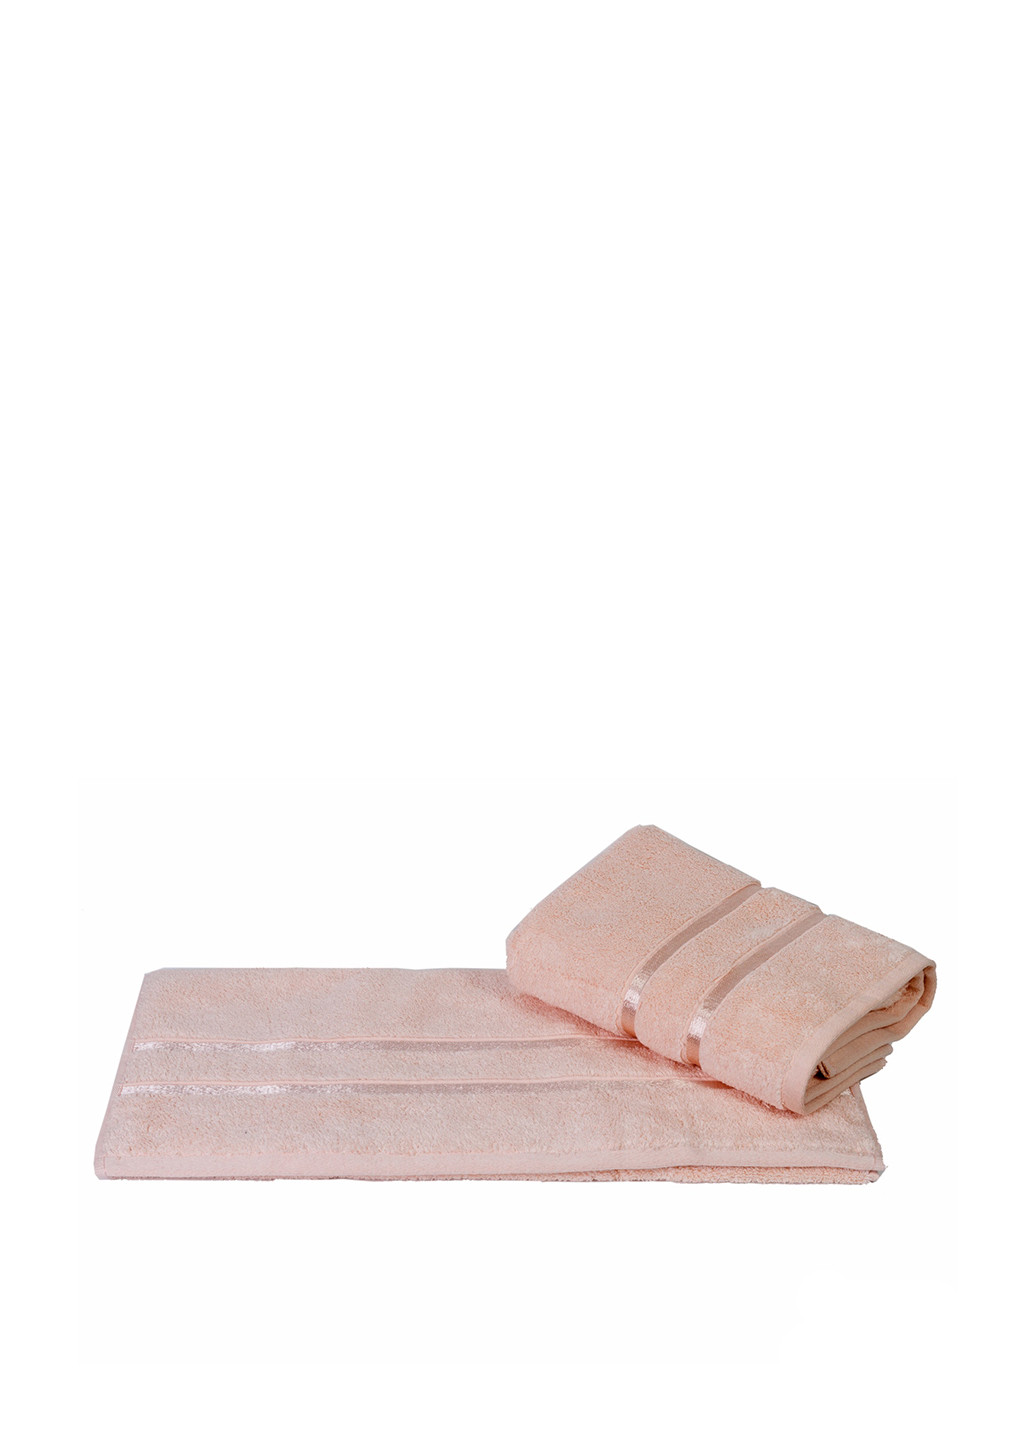 Hobby полотенце, 70х140 см полоска светло-розовый производство - Турция